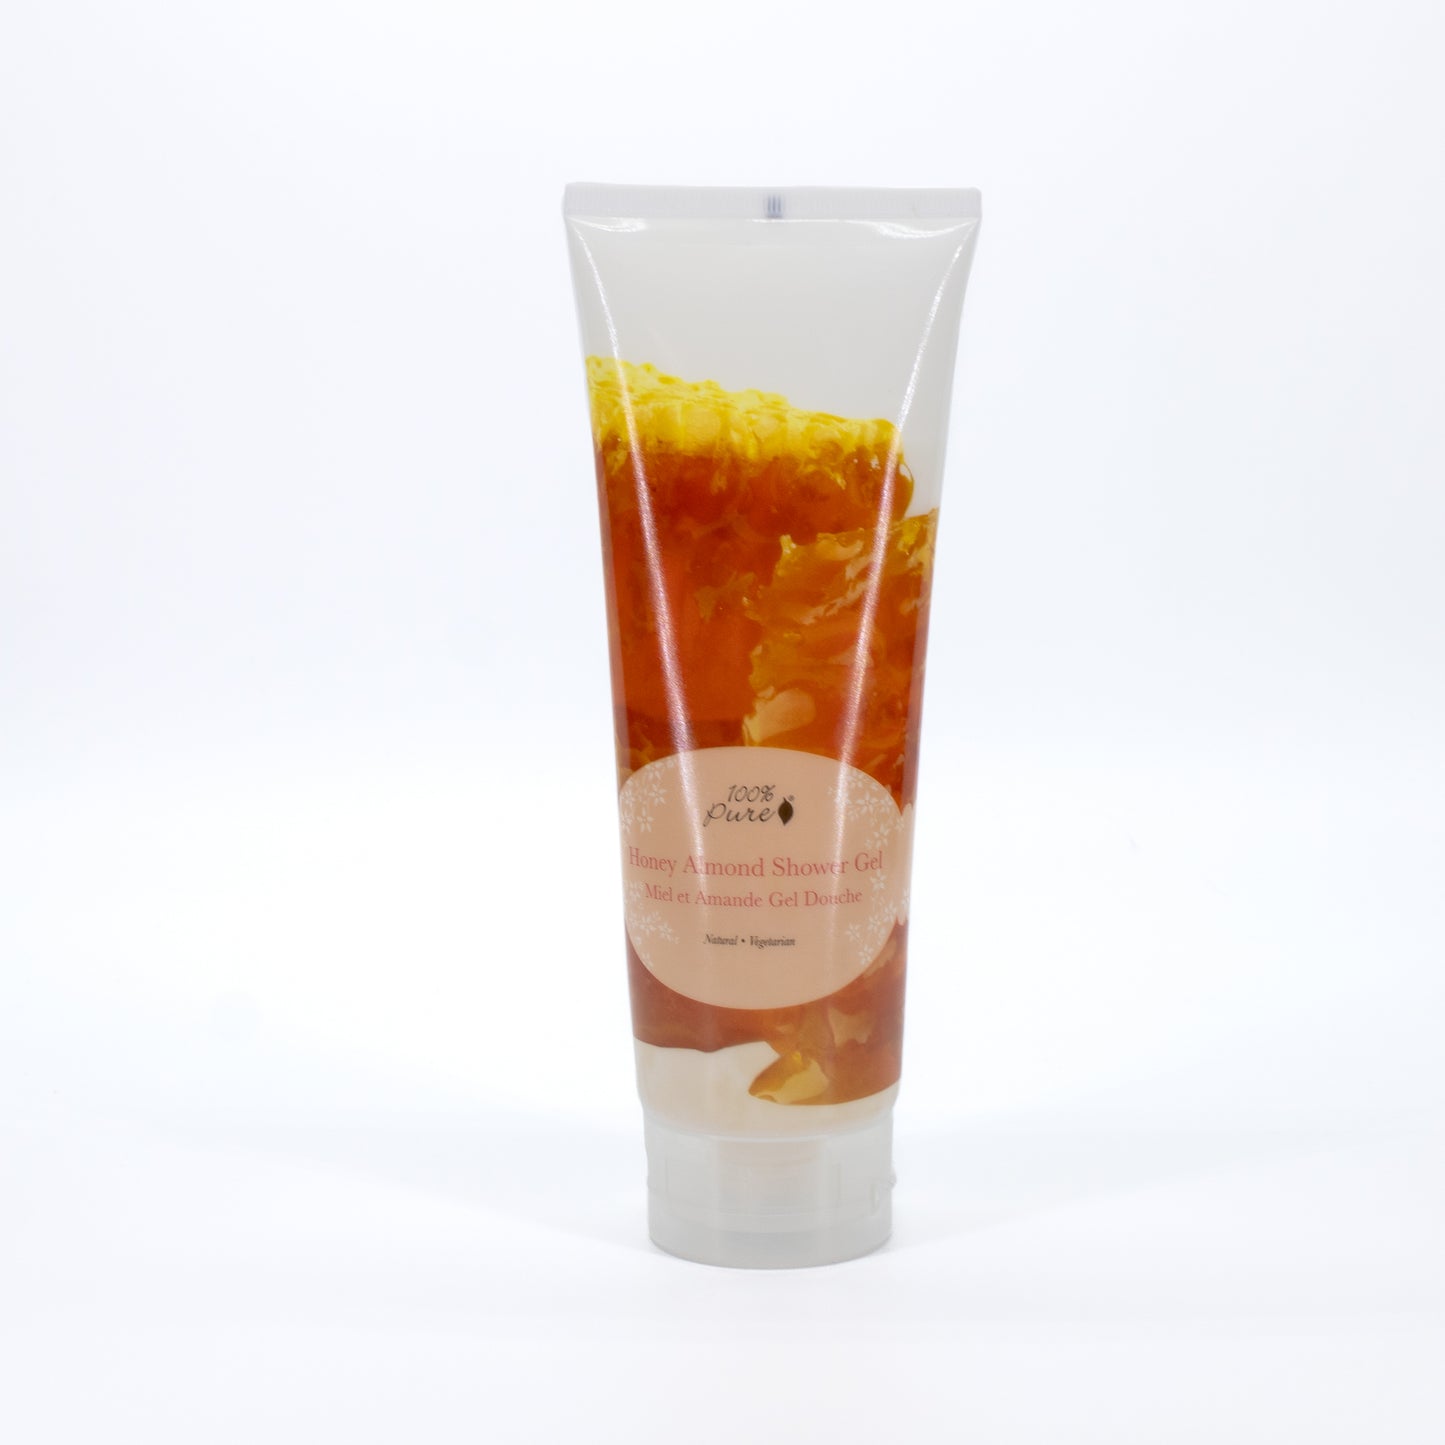 100% pure Honey Almond Shower Gel 8oz - New